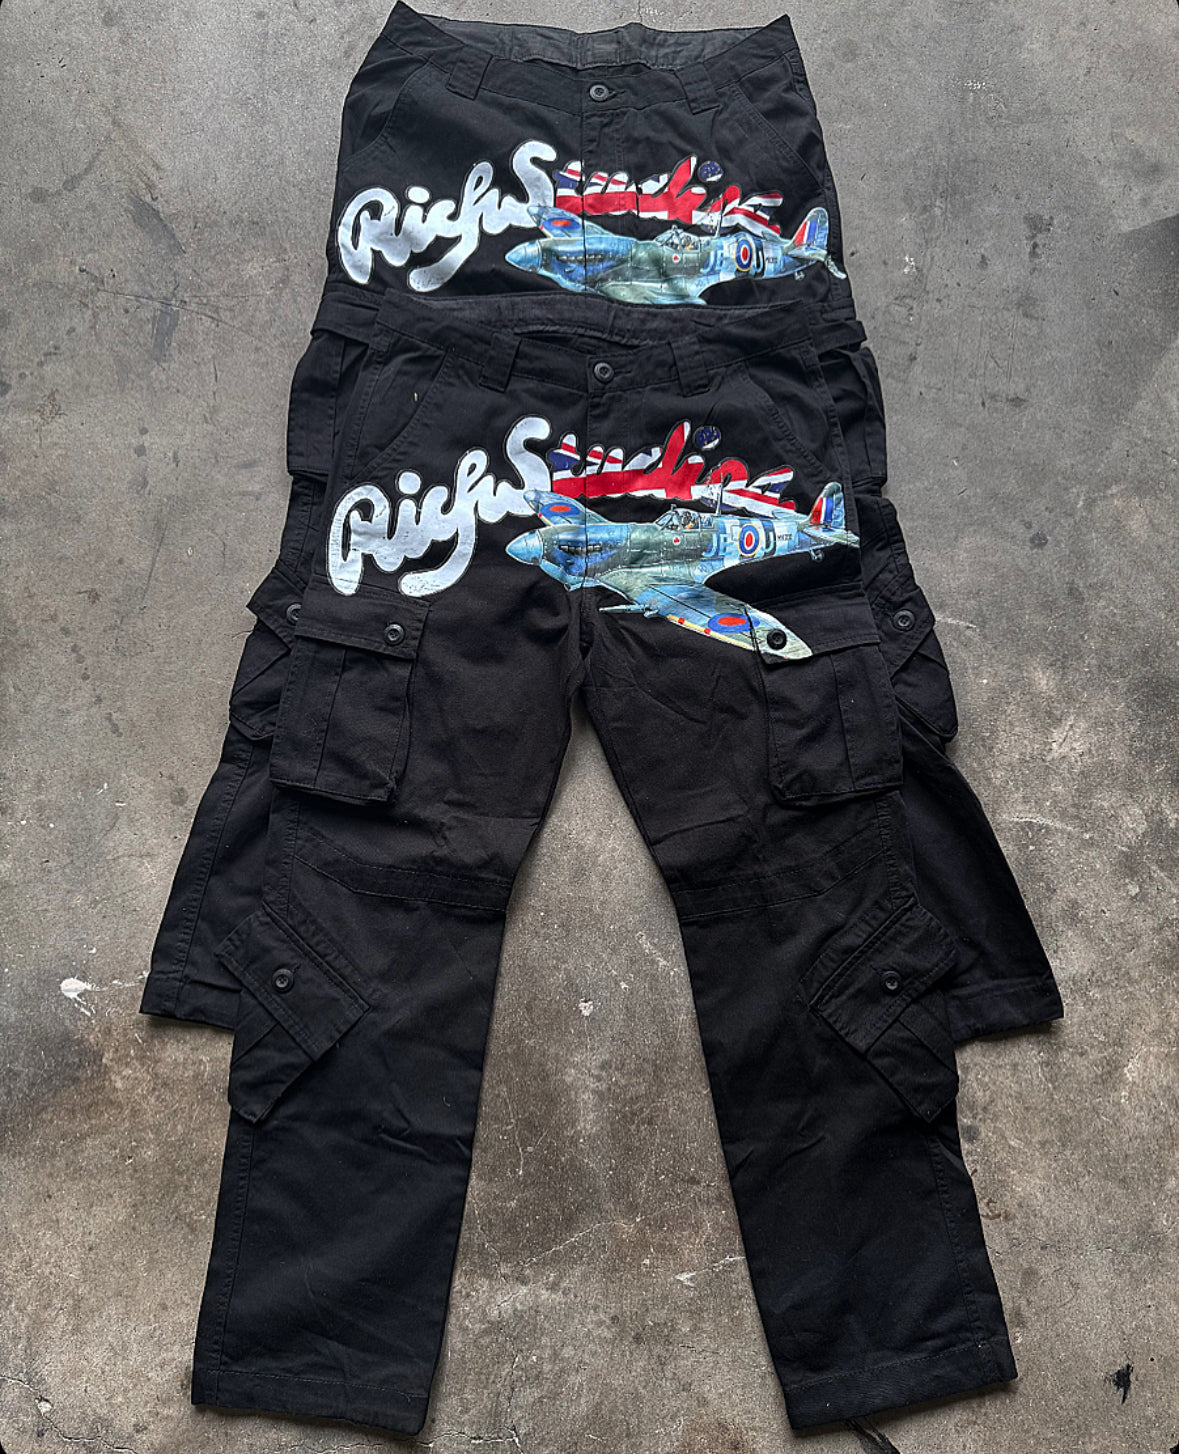 RAF Cargo pants